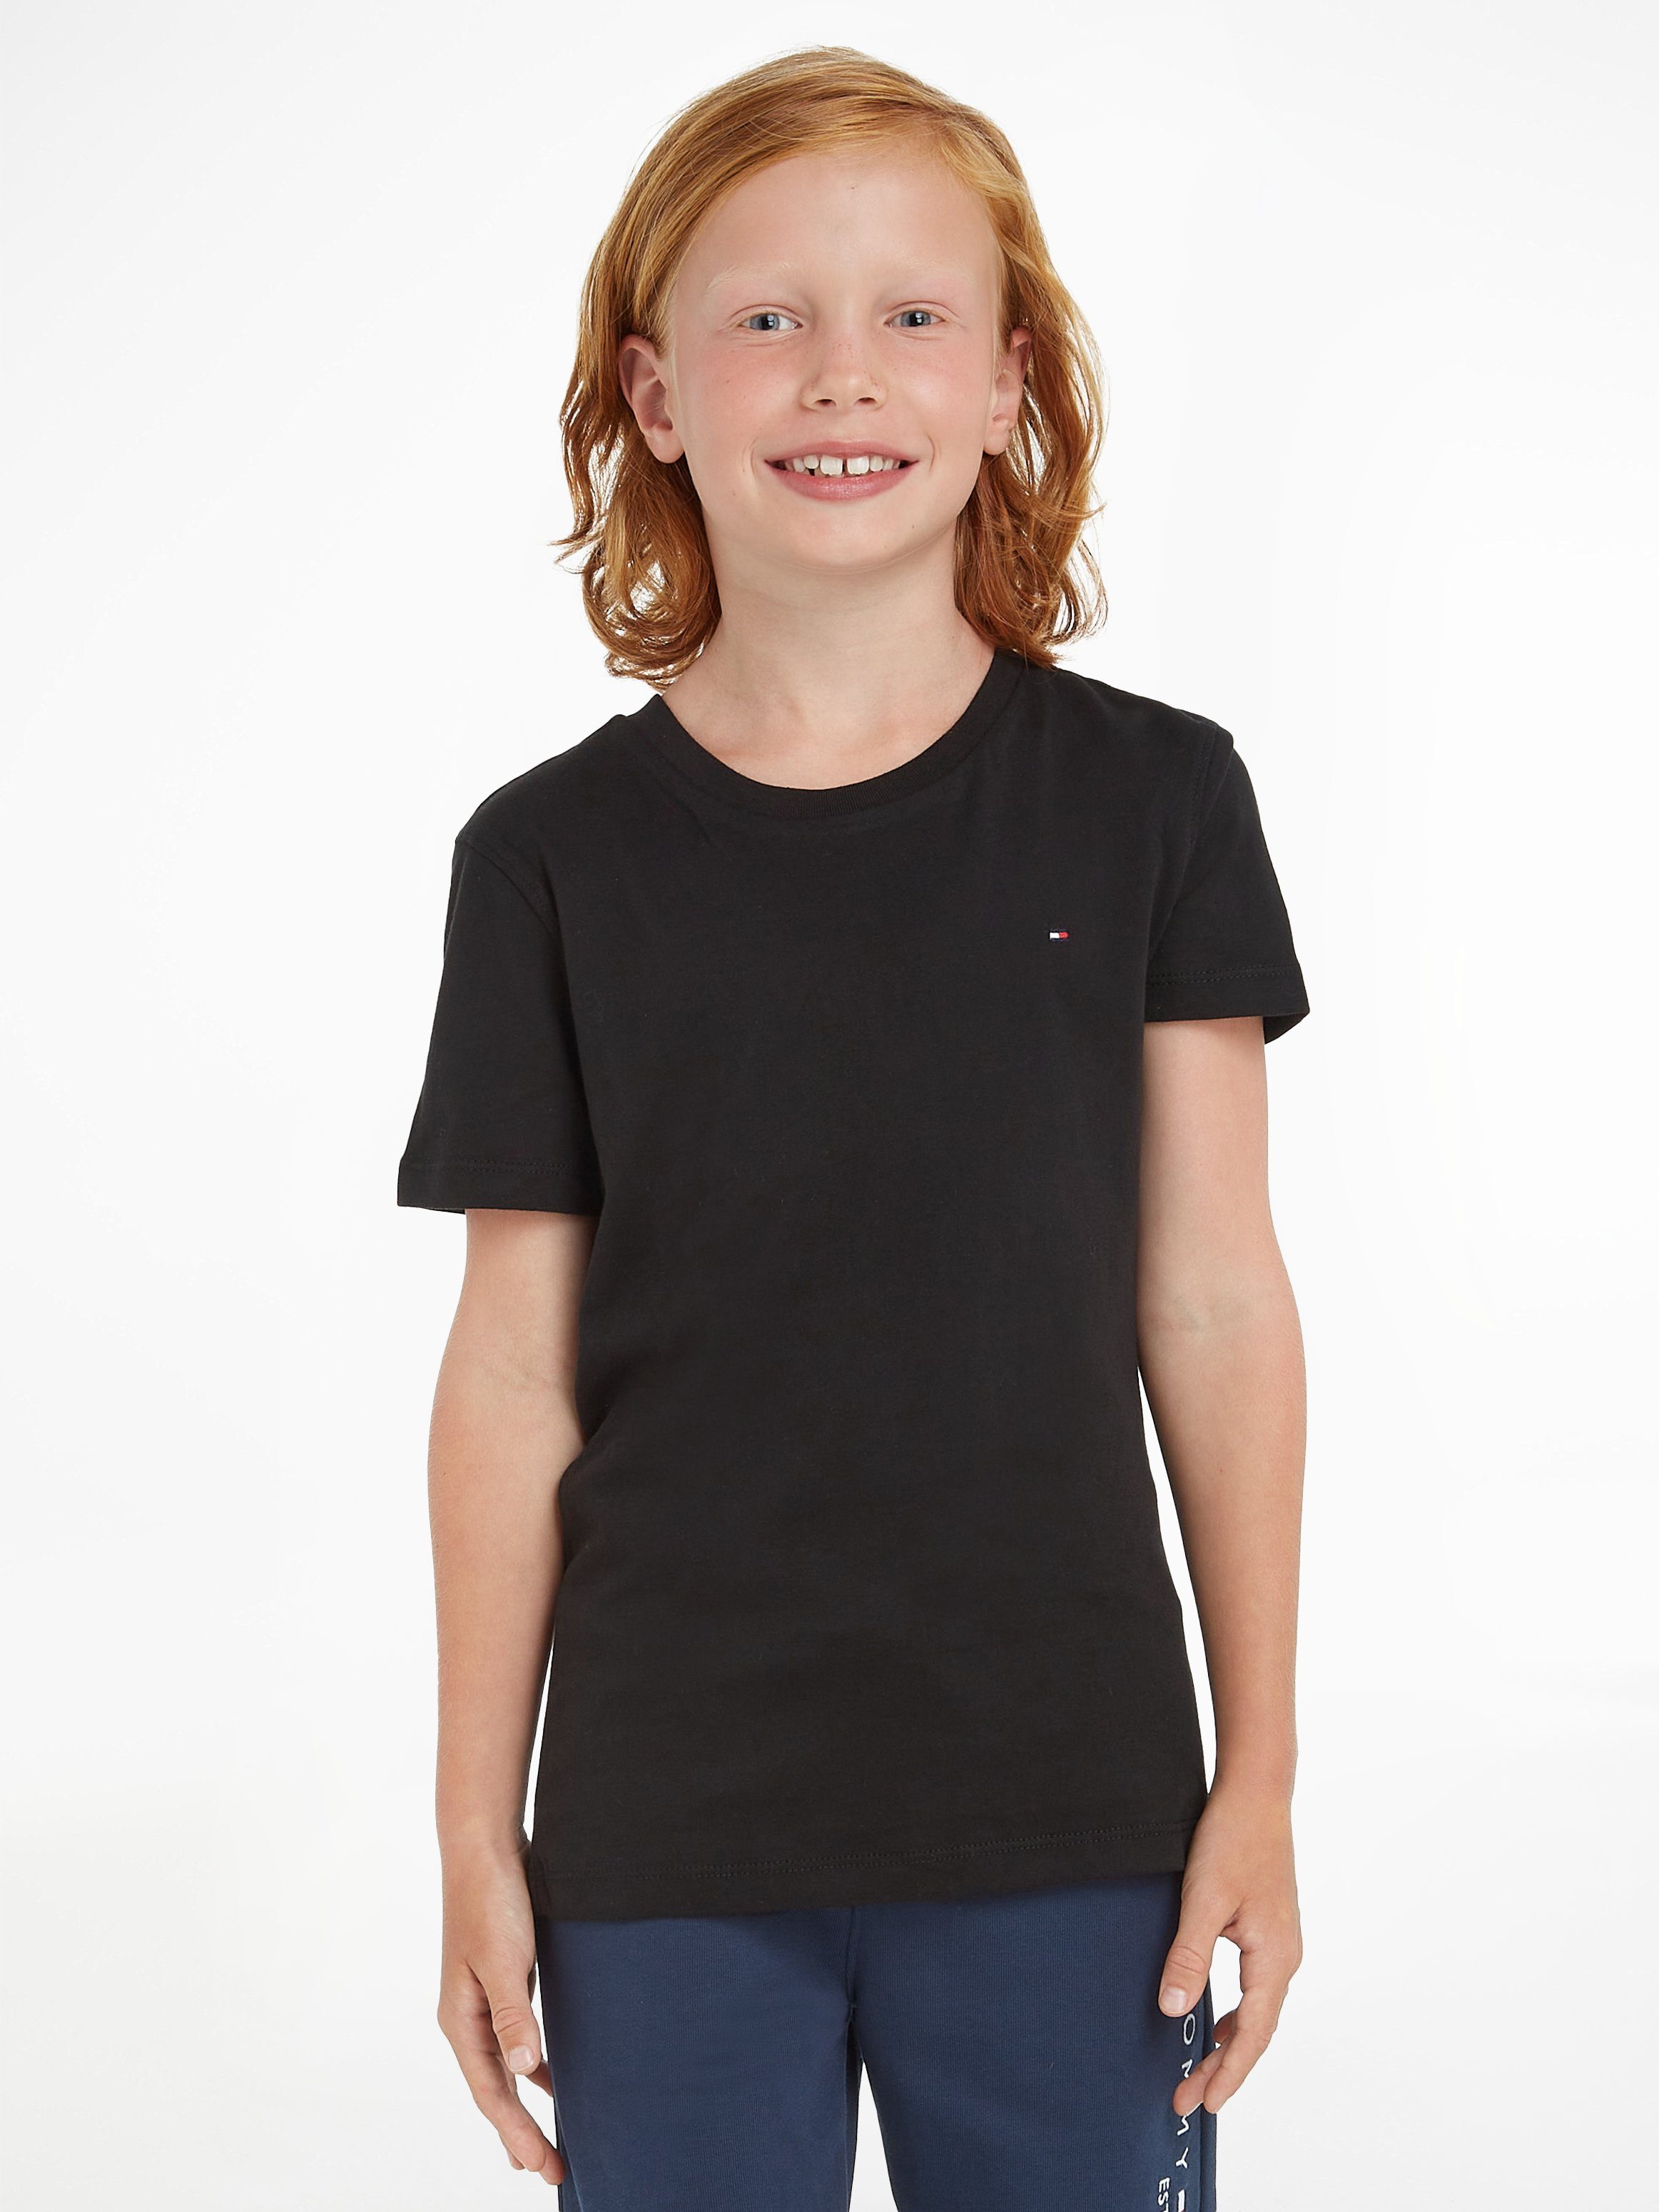 Kids CN BOYS MiniMe,für Jungen Hilfiger Tommy KNIT Kinder T-Shirt Junior BASIC